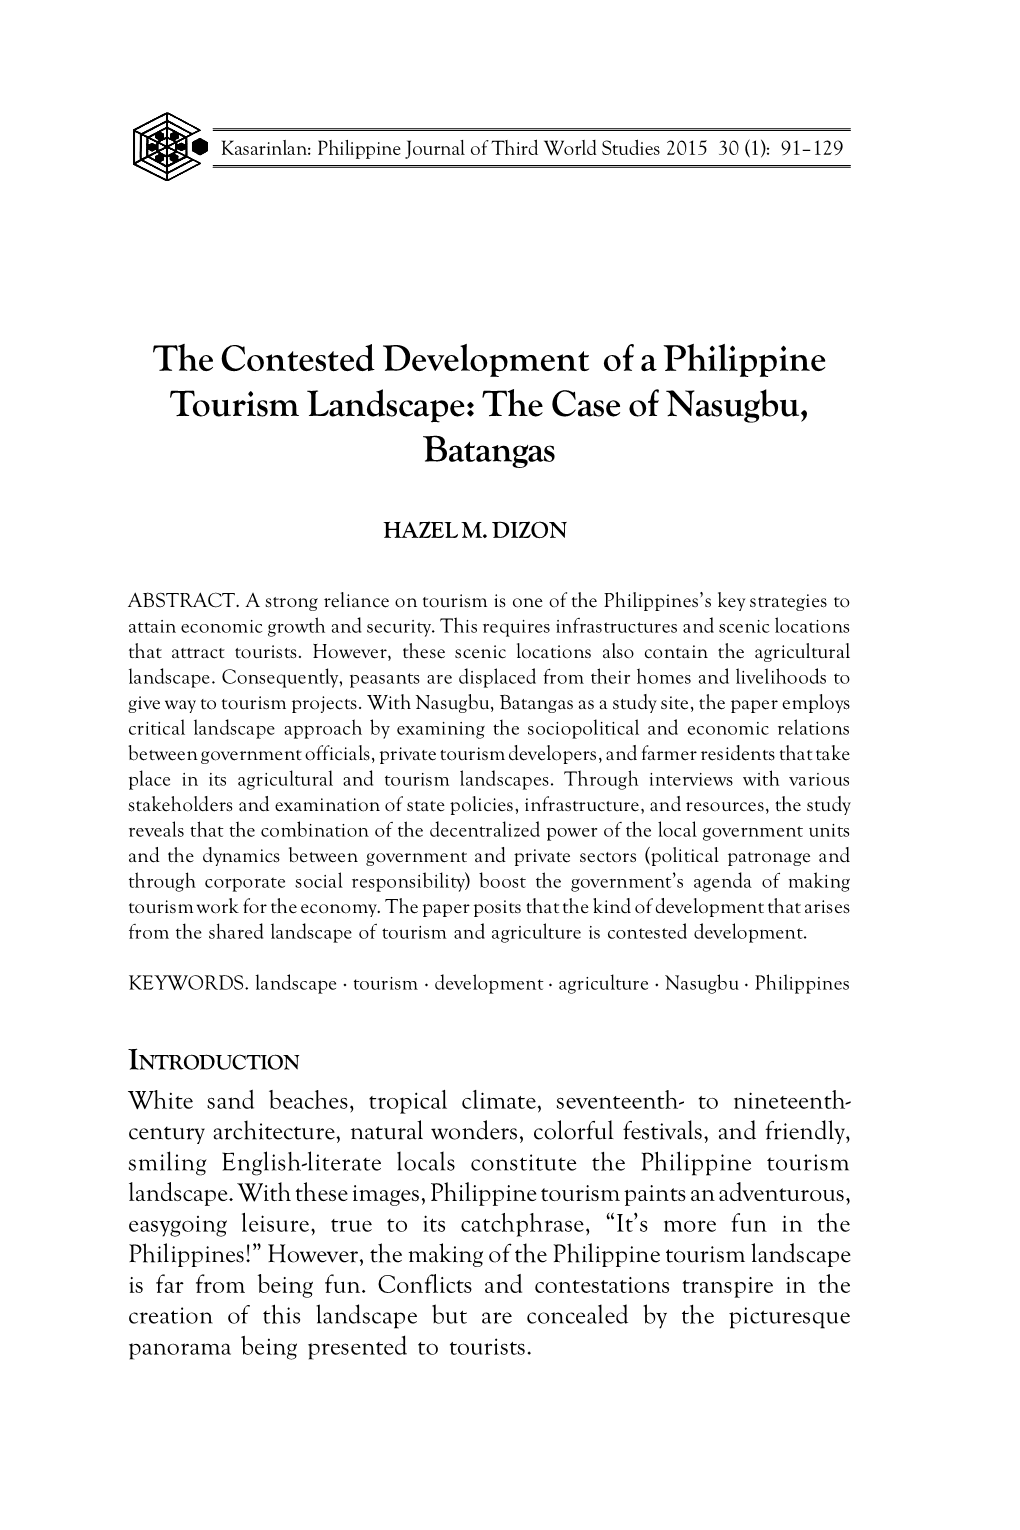 The Case of Nasugbu, Batangas